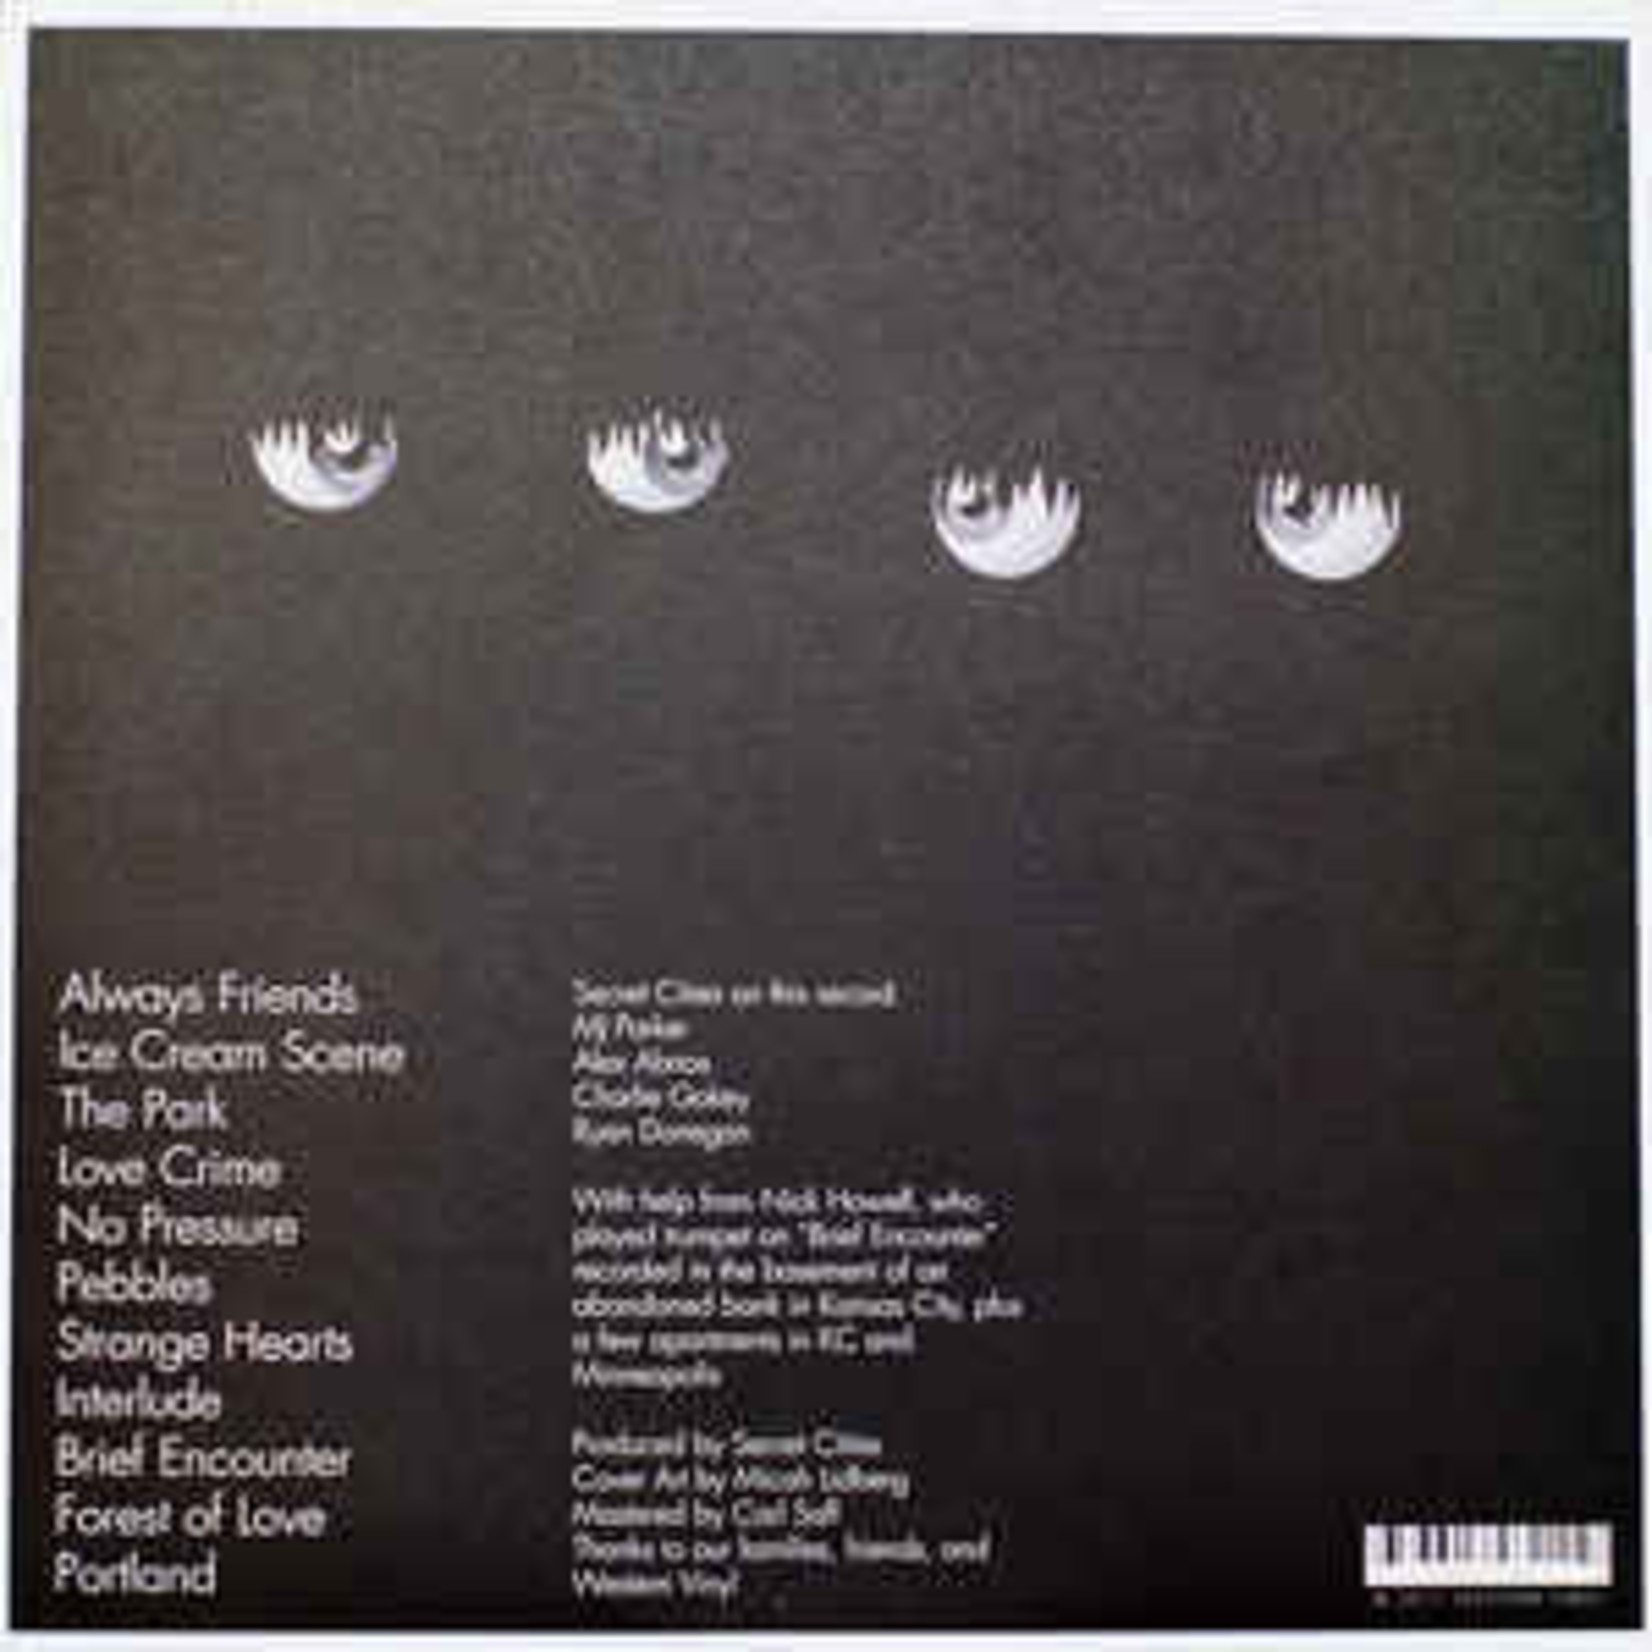 Western Vinyl Secret Cities - Strange Hearts (LP)